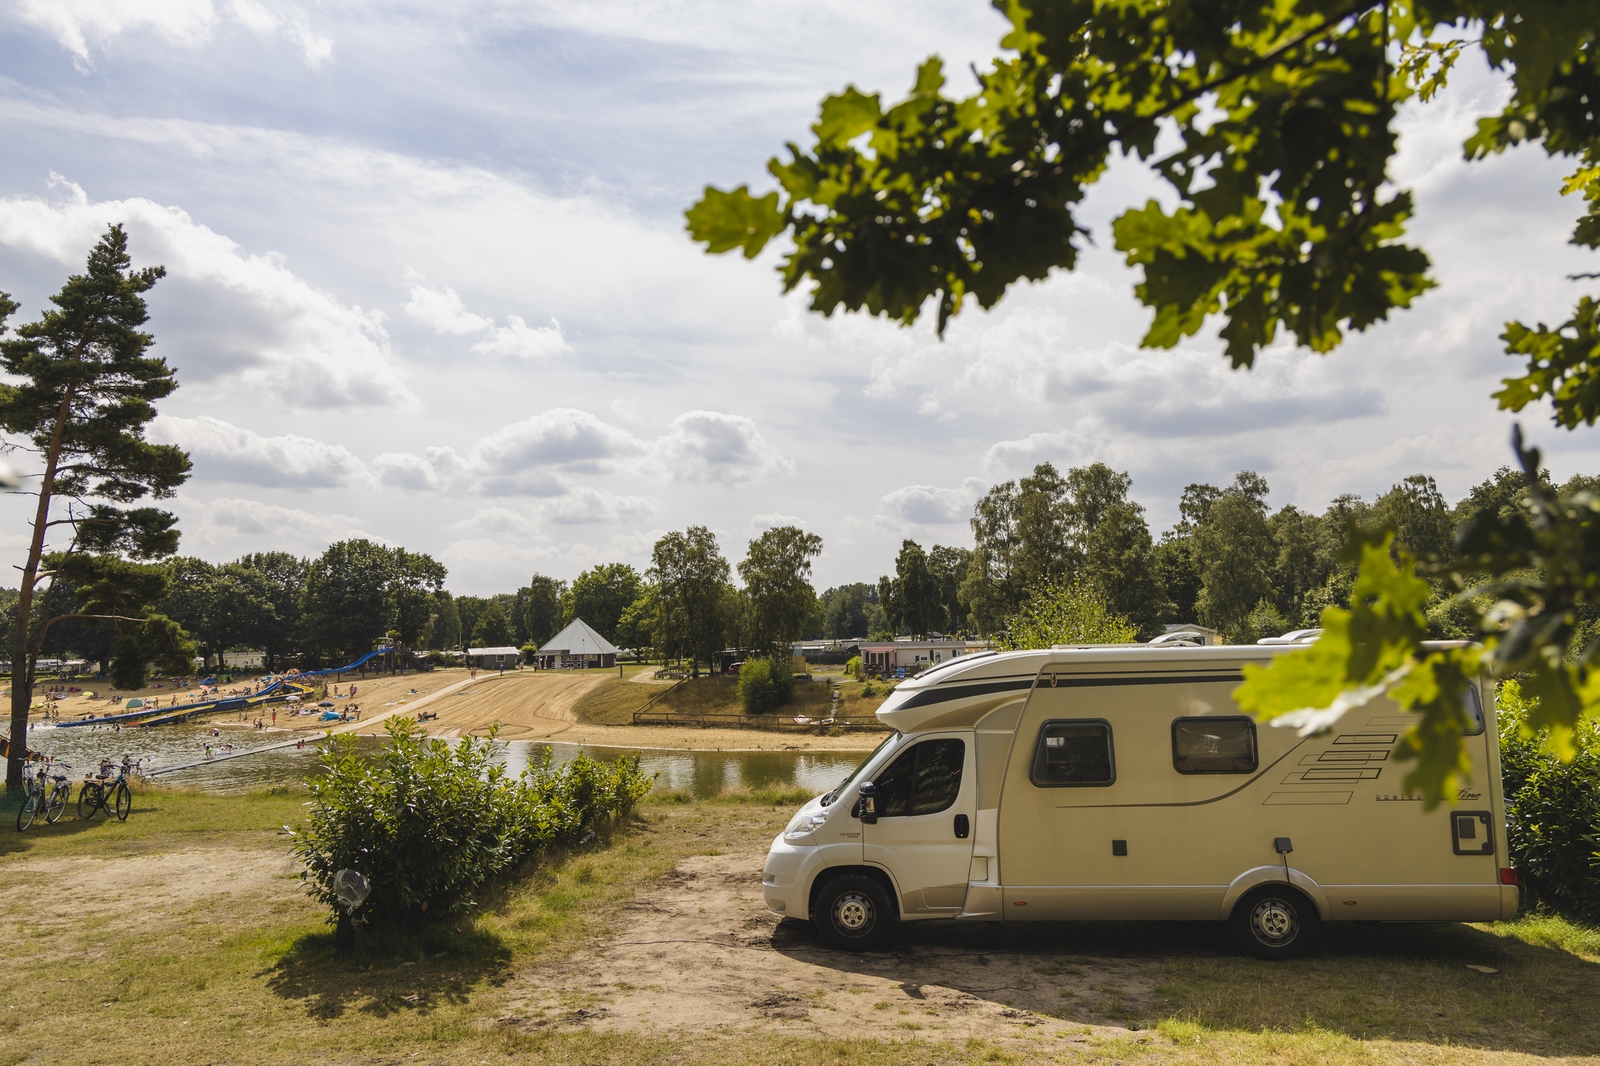 Camping WB Resort GmbH - Comfort kampeerplaats aan het water